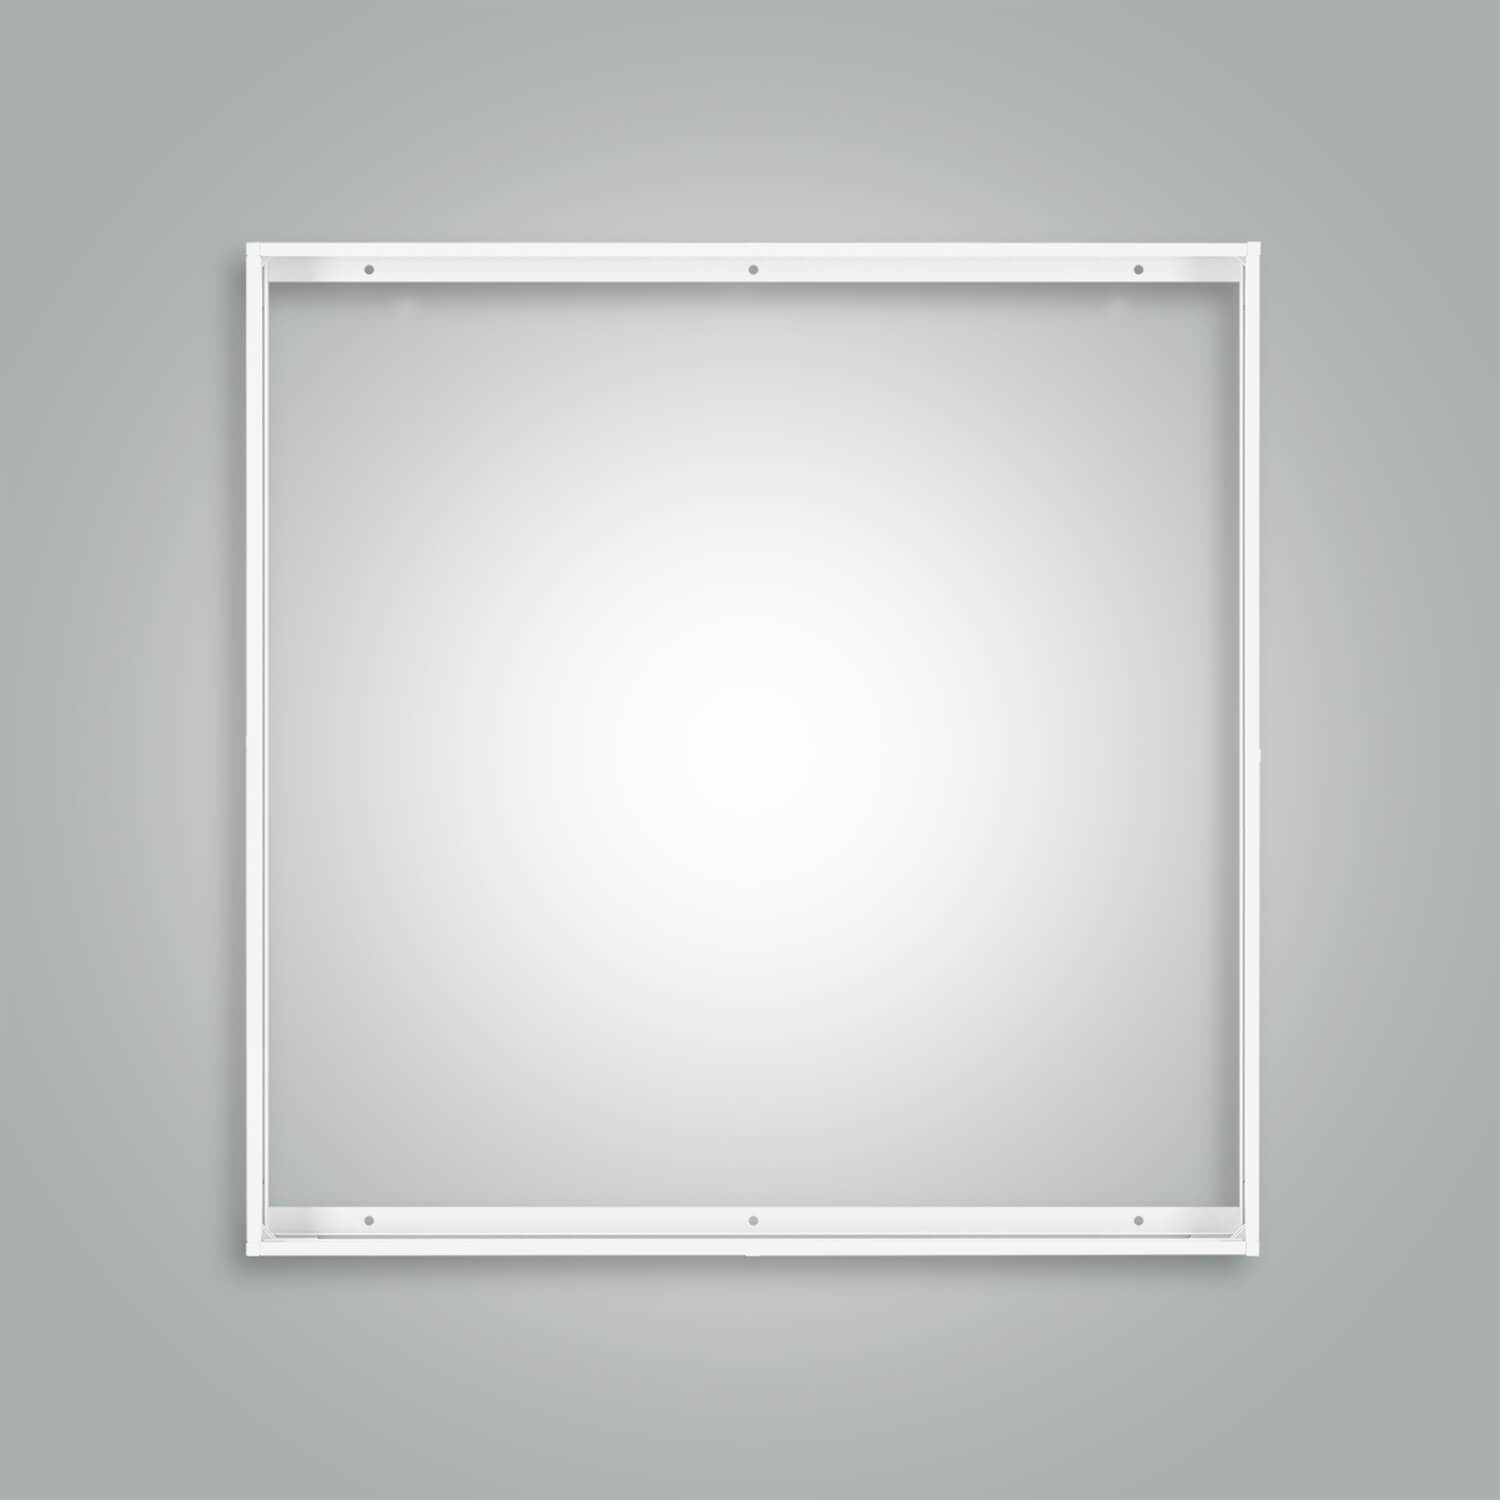 Aufbaurahmen Aluminium weiß  für LED Panel 62x62cm L625xB625xH43mm (Kunststoffclips)